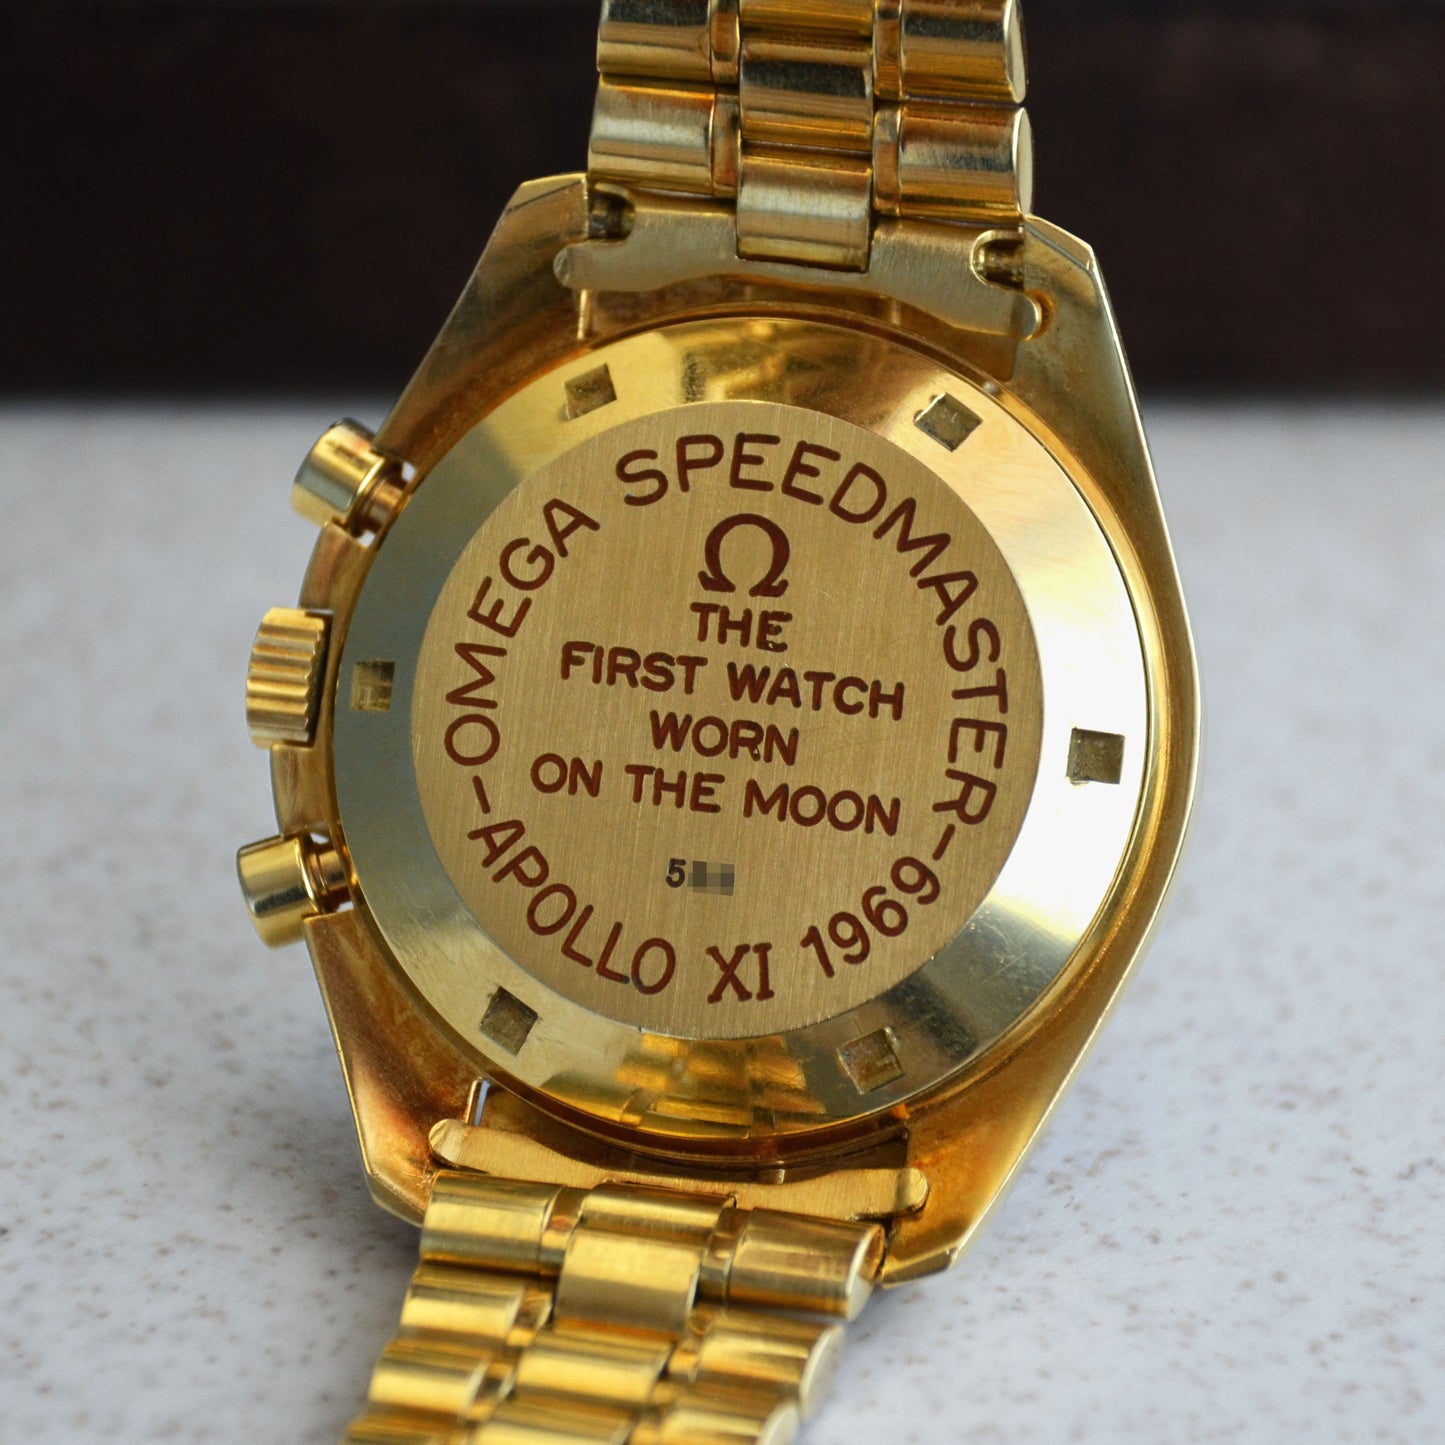 Omega Rare Speedmaster Professional Apollo XI 1969 - Tribute to Astronauts, Yellow Gold